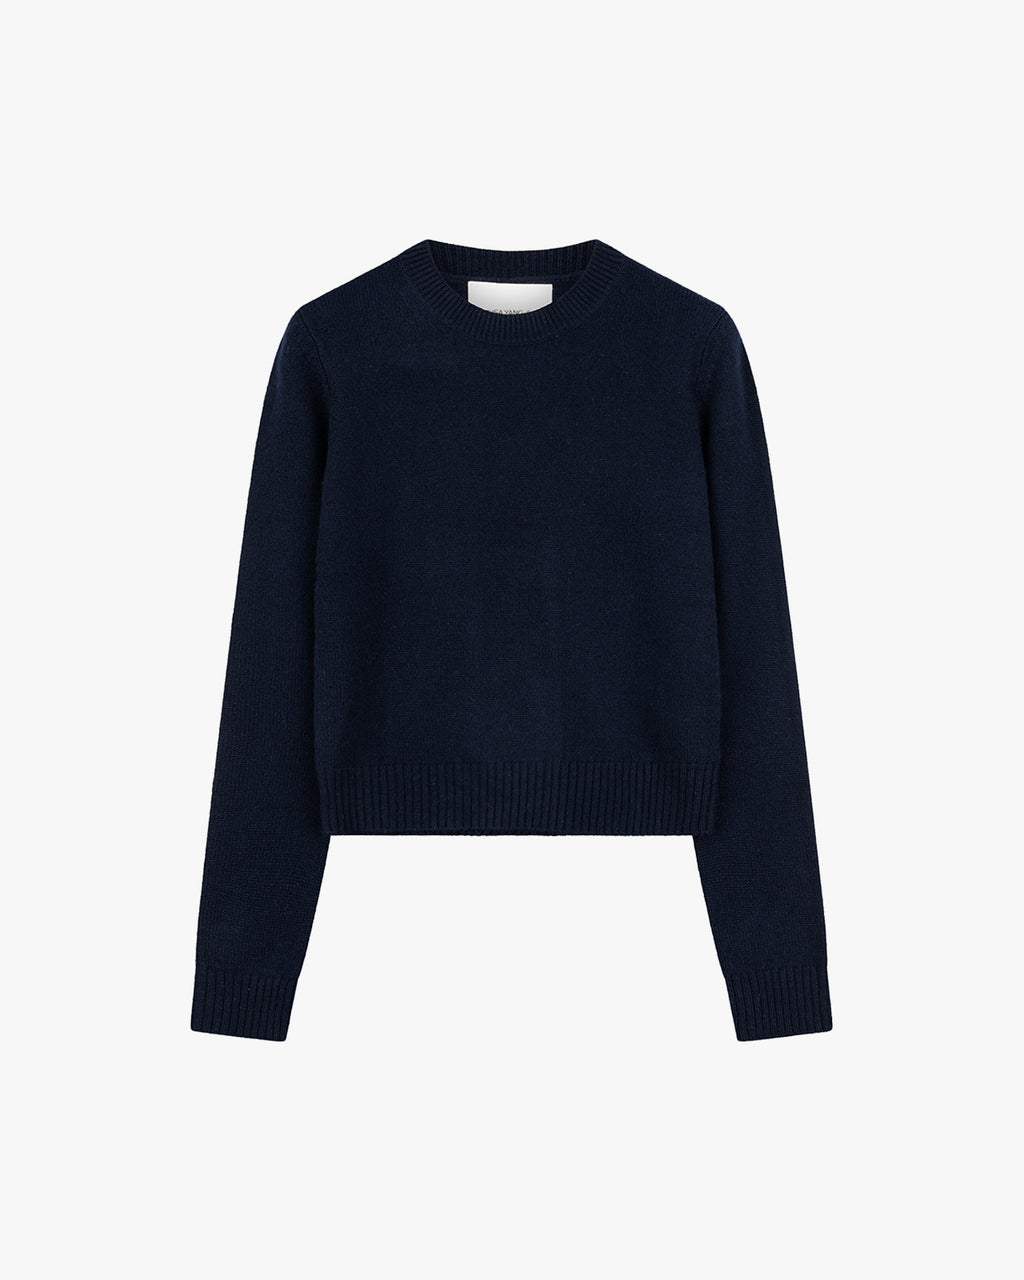 'Mable' Sweater by Lisa Yang | Dantendorfer Online Shop